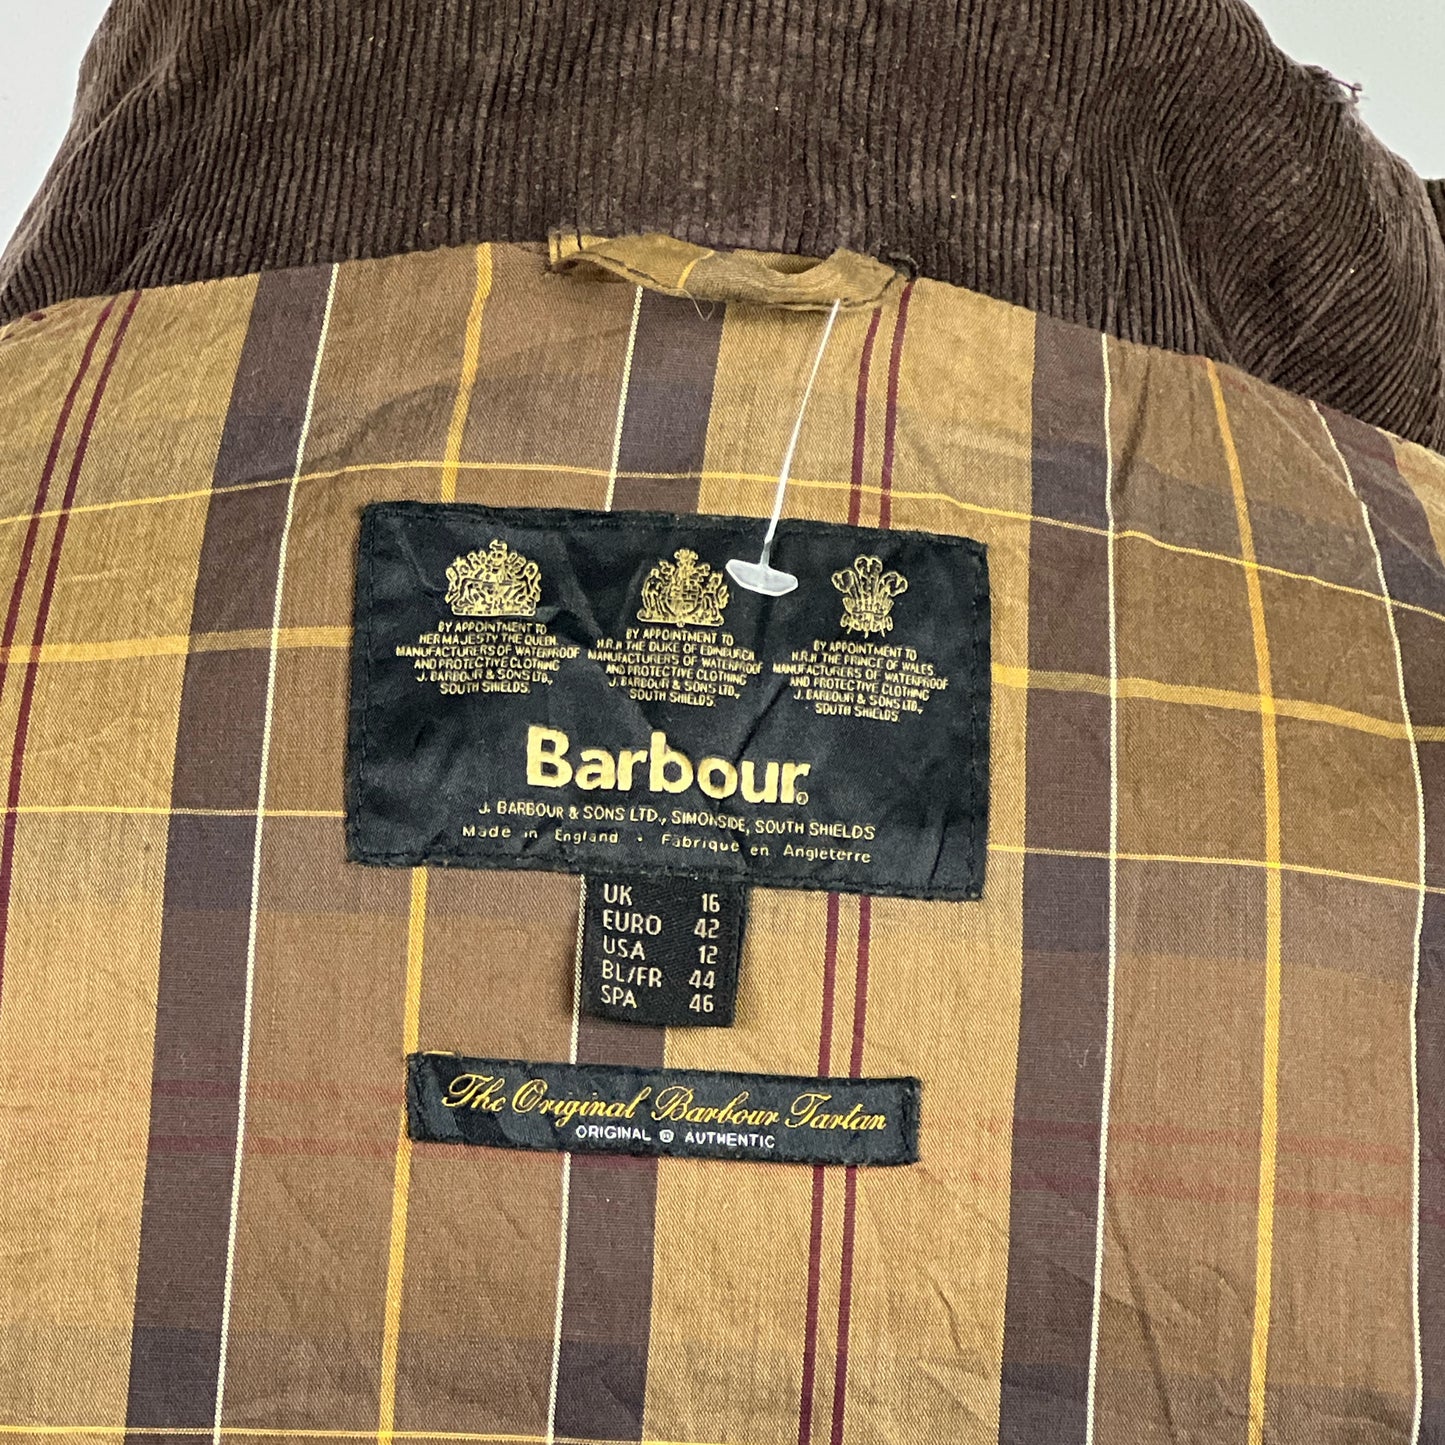 Giacca Barbour marrone leggera donna UK16 Tg. 44 Lady brown wax Jacket UK16